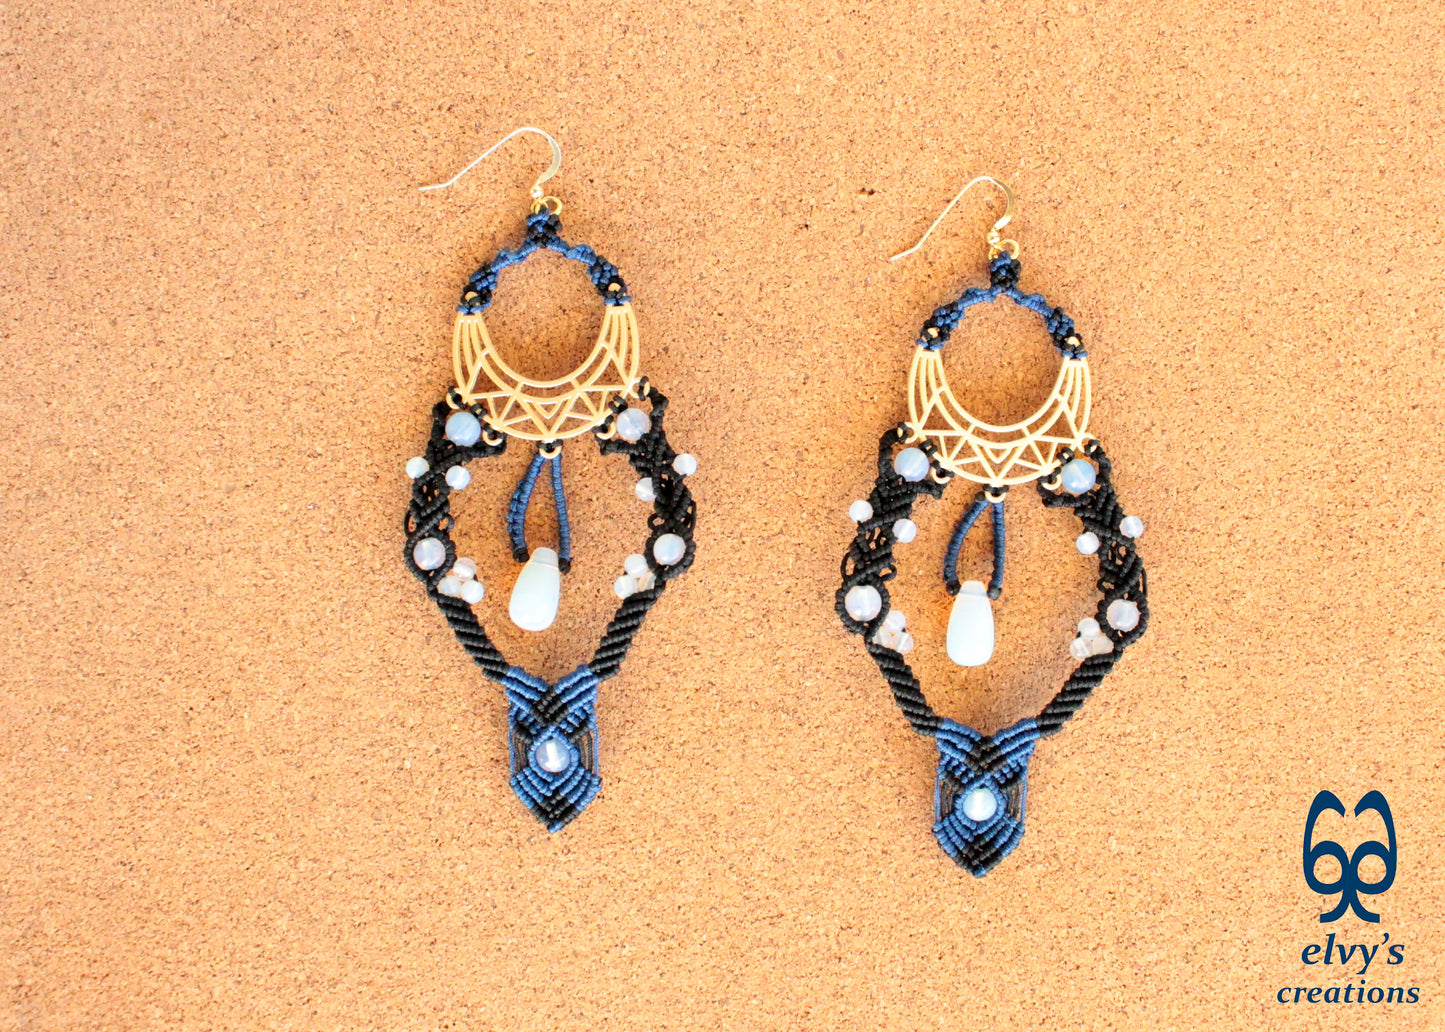 Black and Blue Macrame Earrings with Moonstones Glamour Long Dangle Boho Earrings Silver Gold Handmade Jewelry